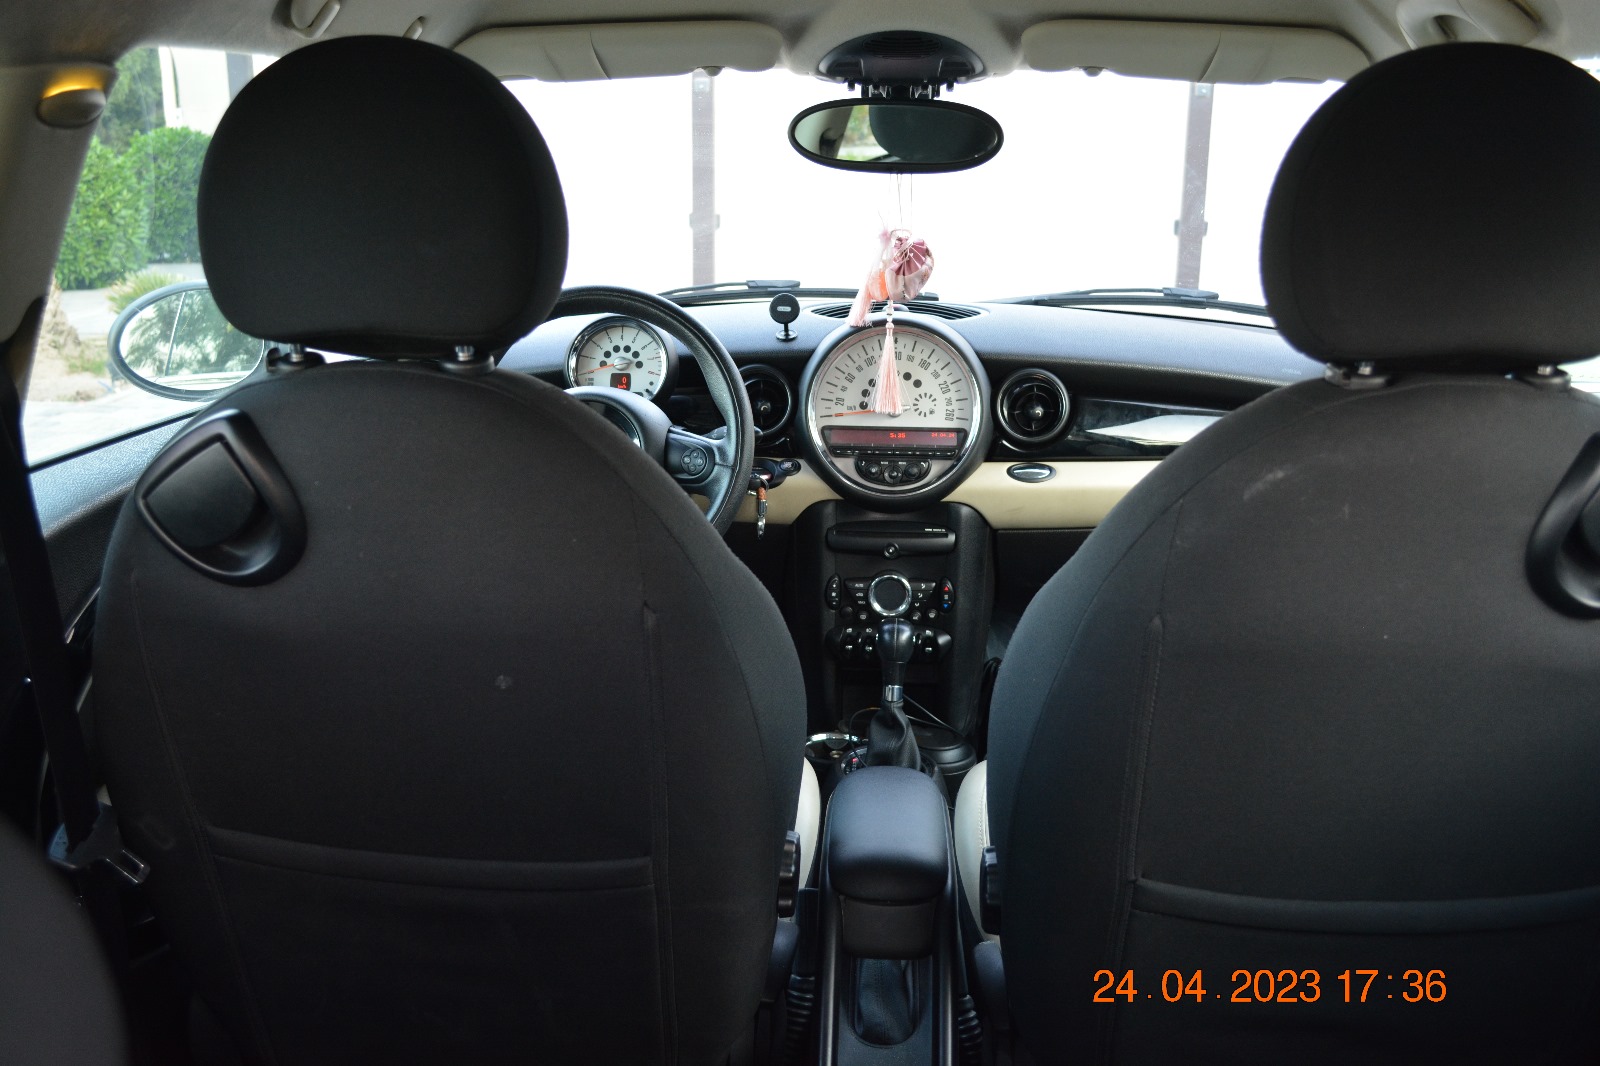 2013 Mini Cooper Coupe, Low mileage 70.000 km only!